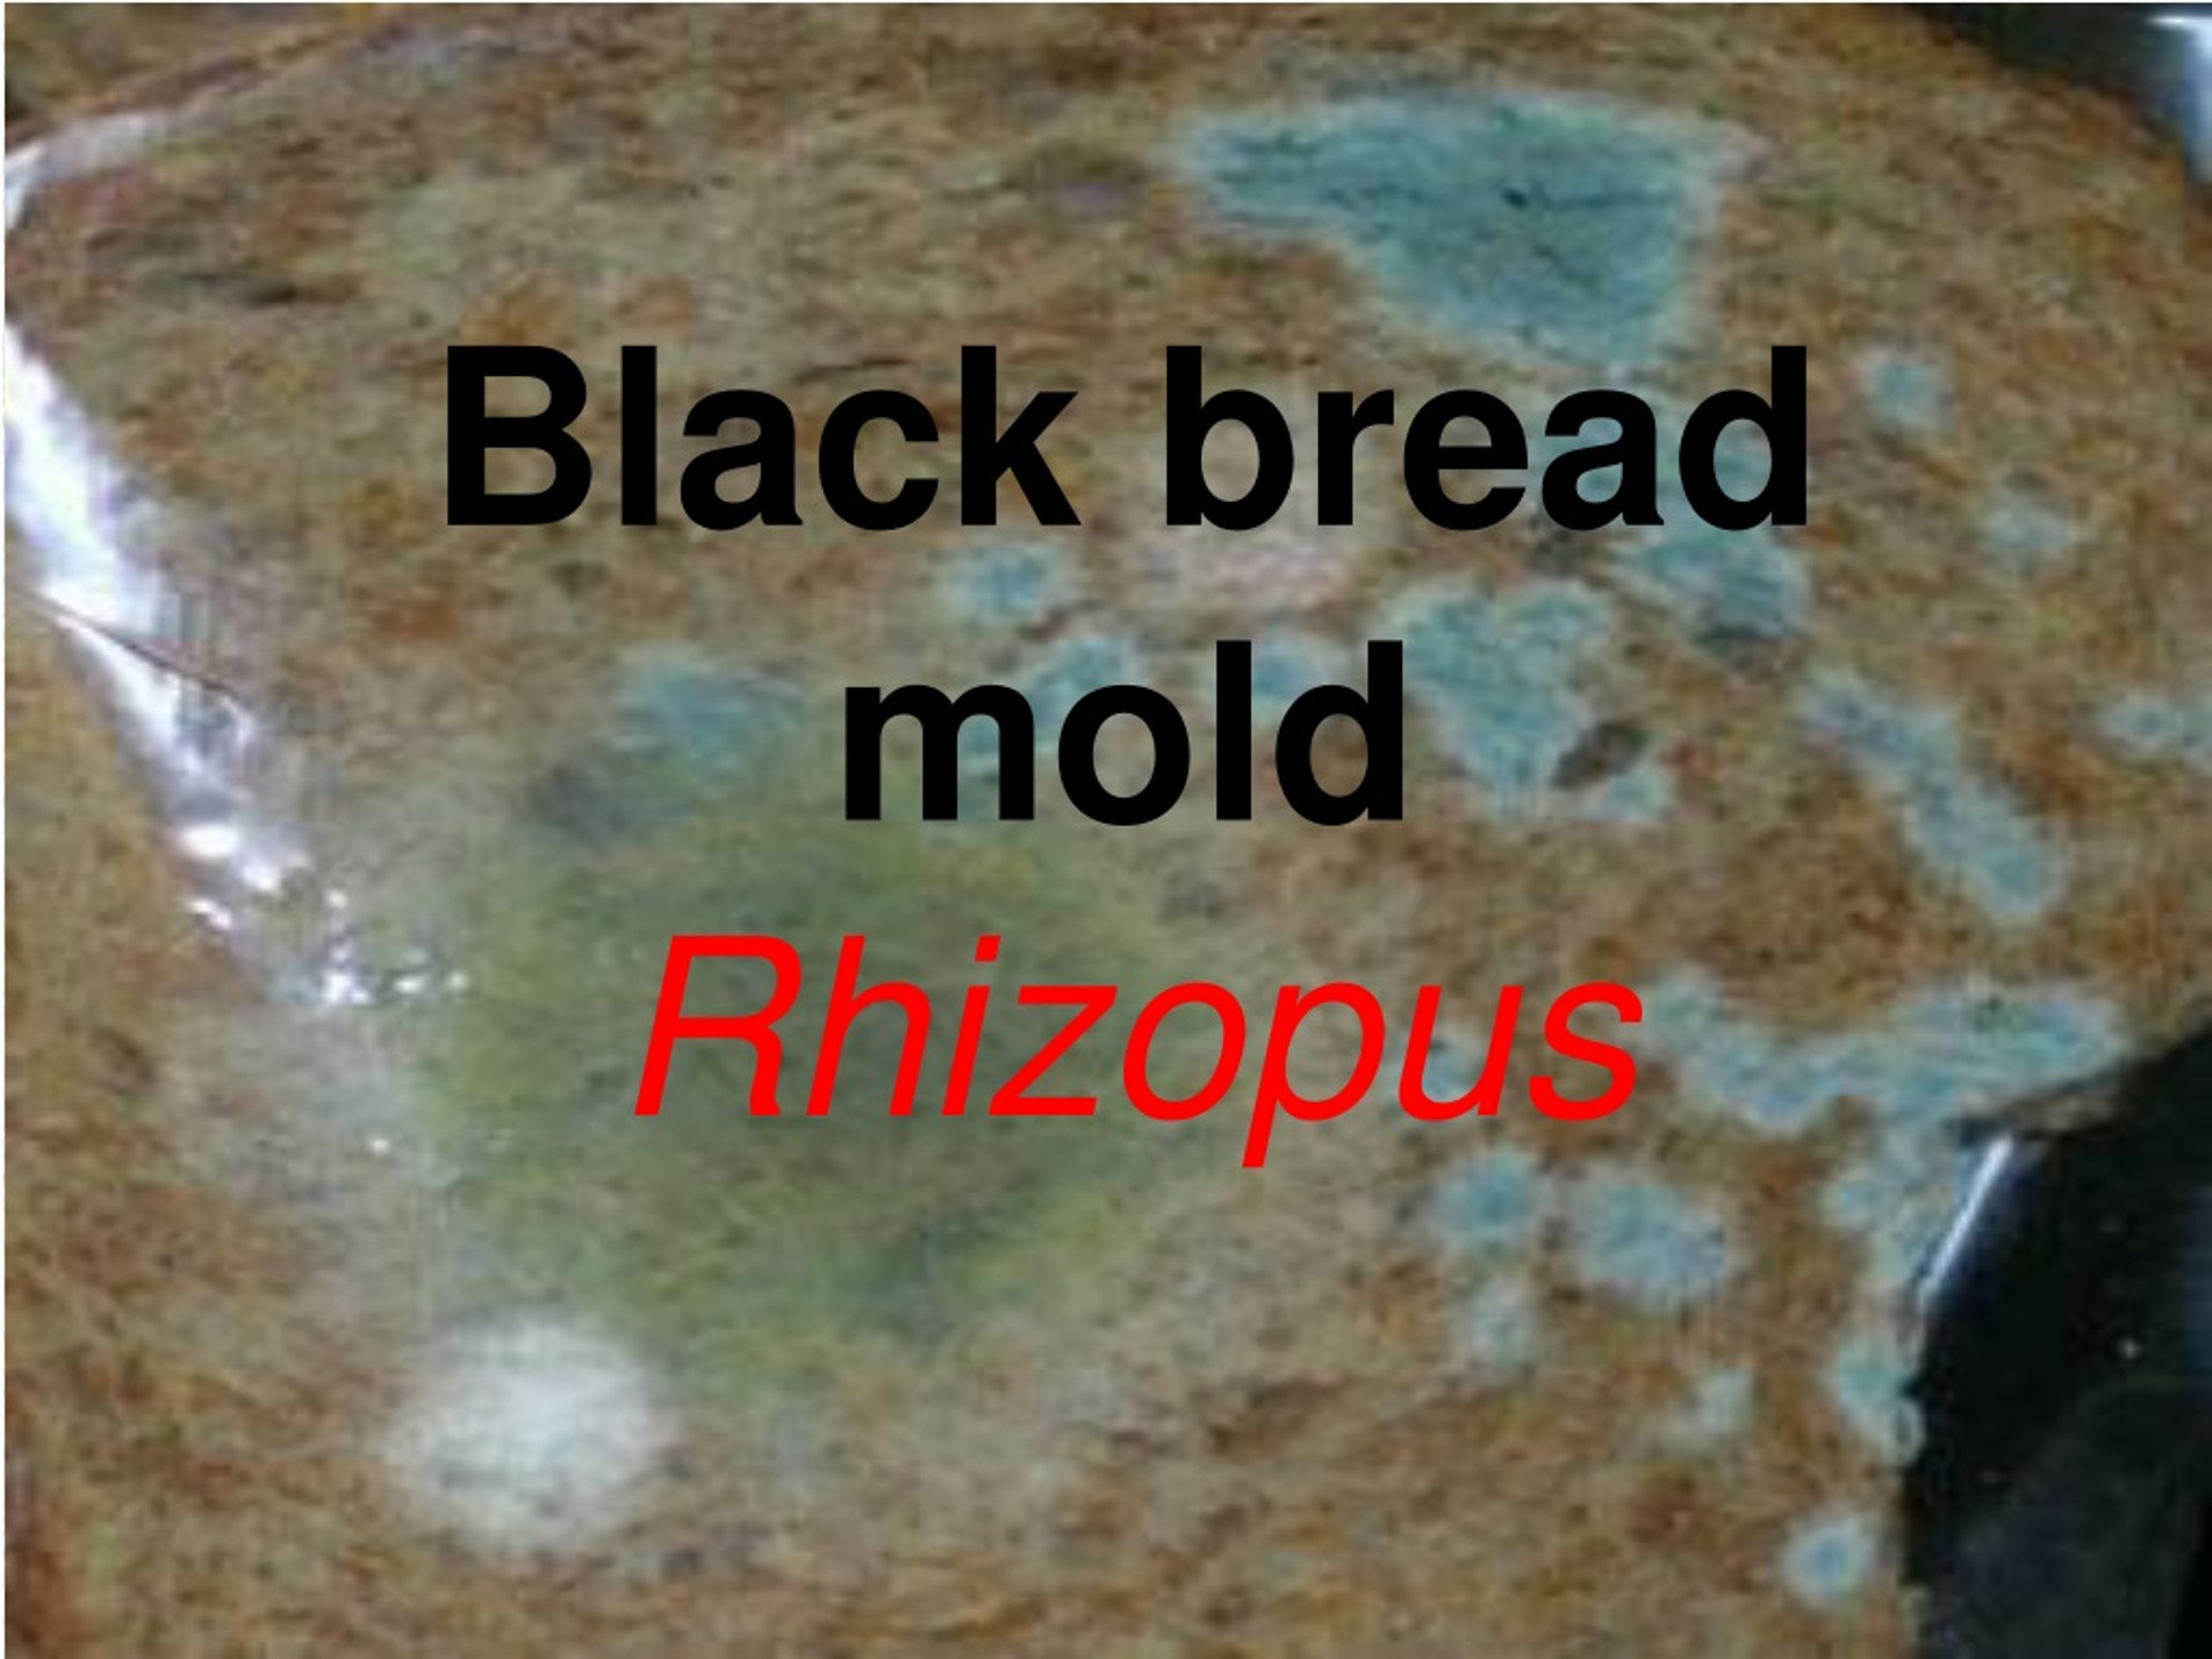 PPT - Black bread mold Rhizopus PowerPoint Presentation, free